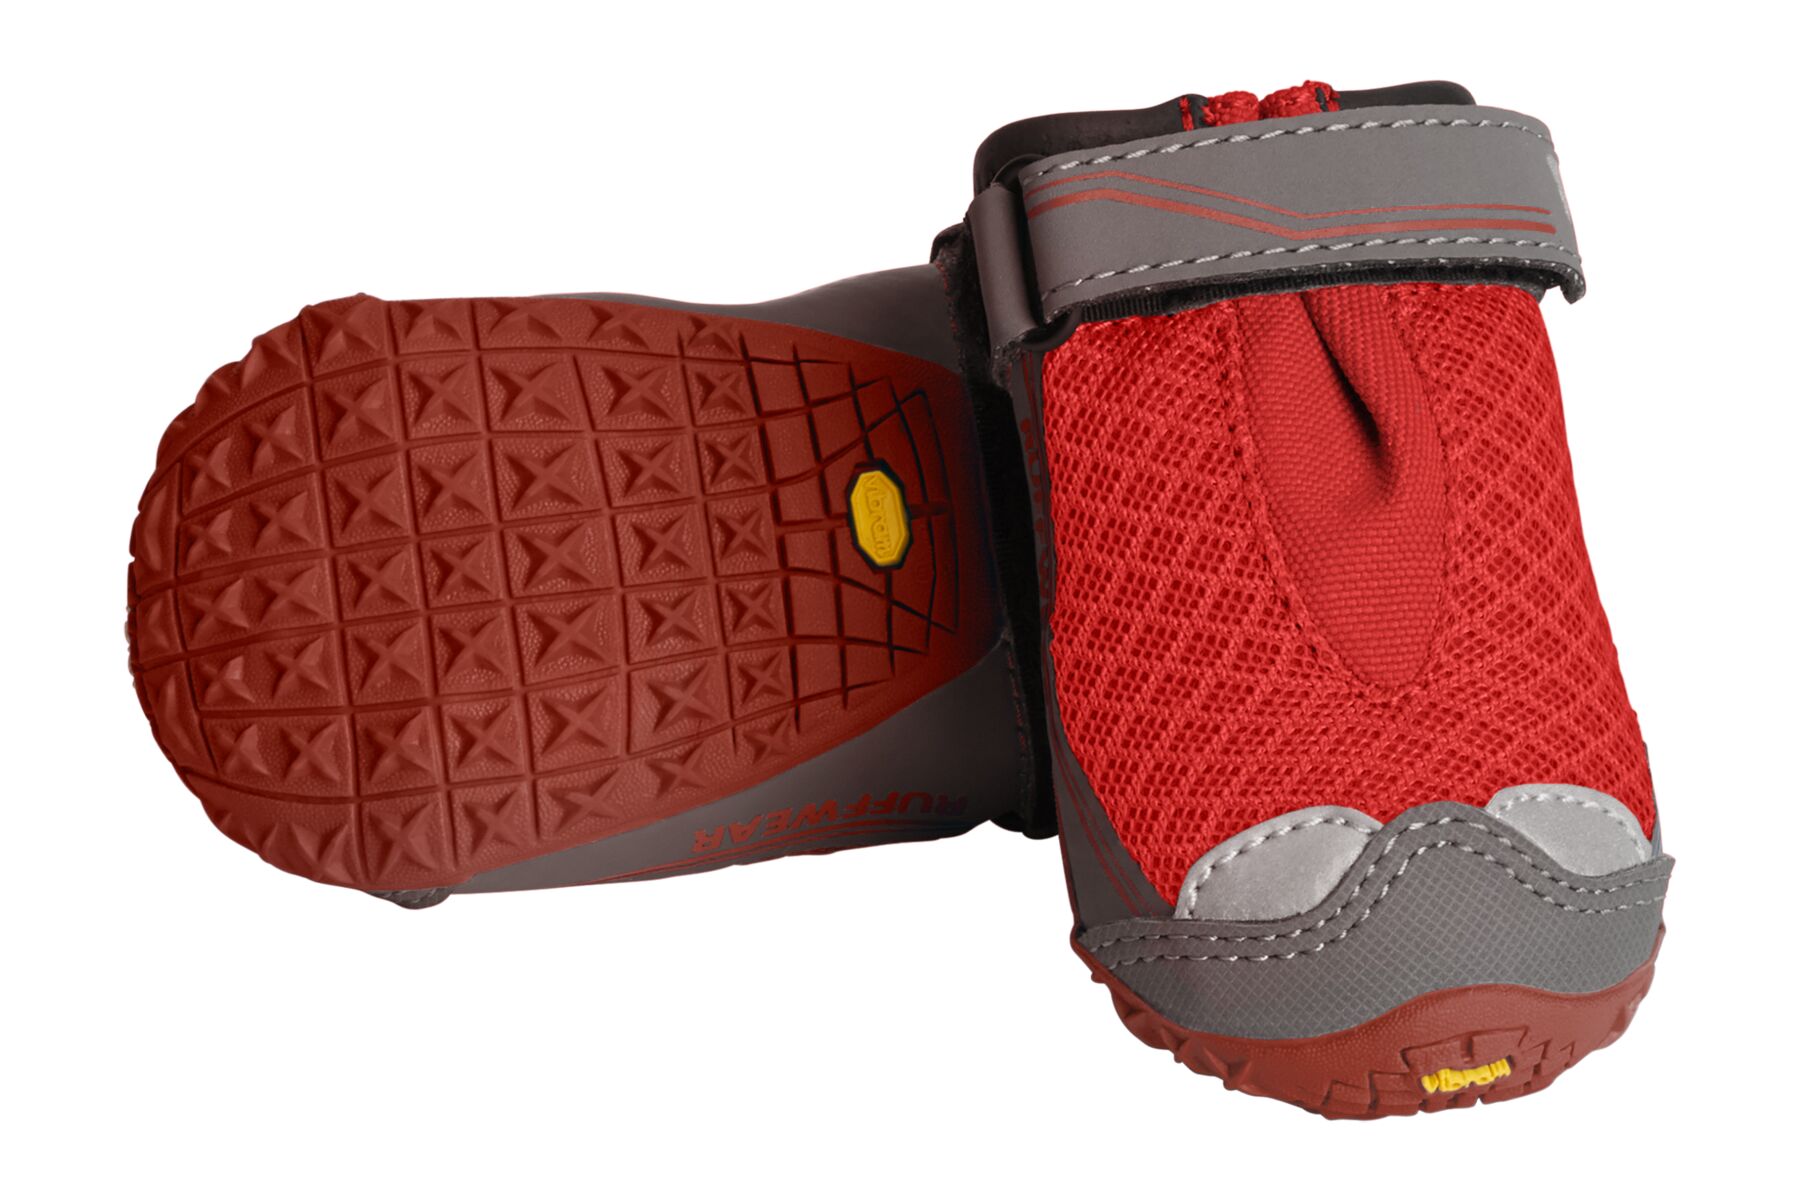 RuffWear Grip Trex™ Boots - set of 2 - Red Sumac